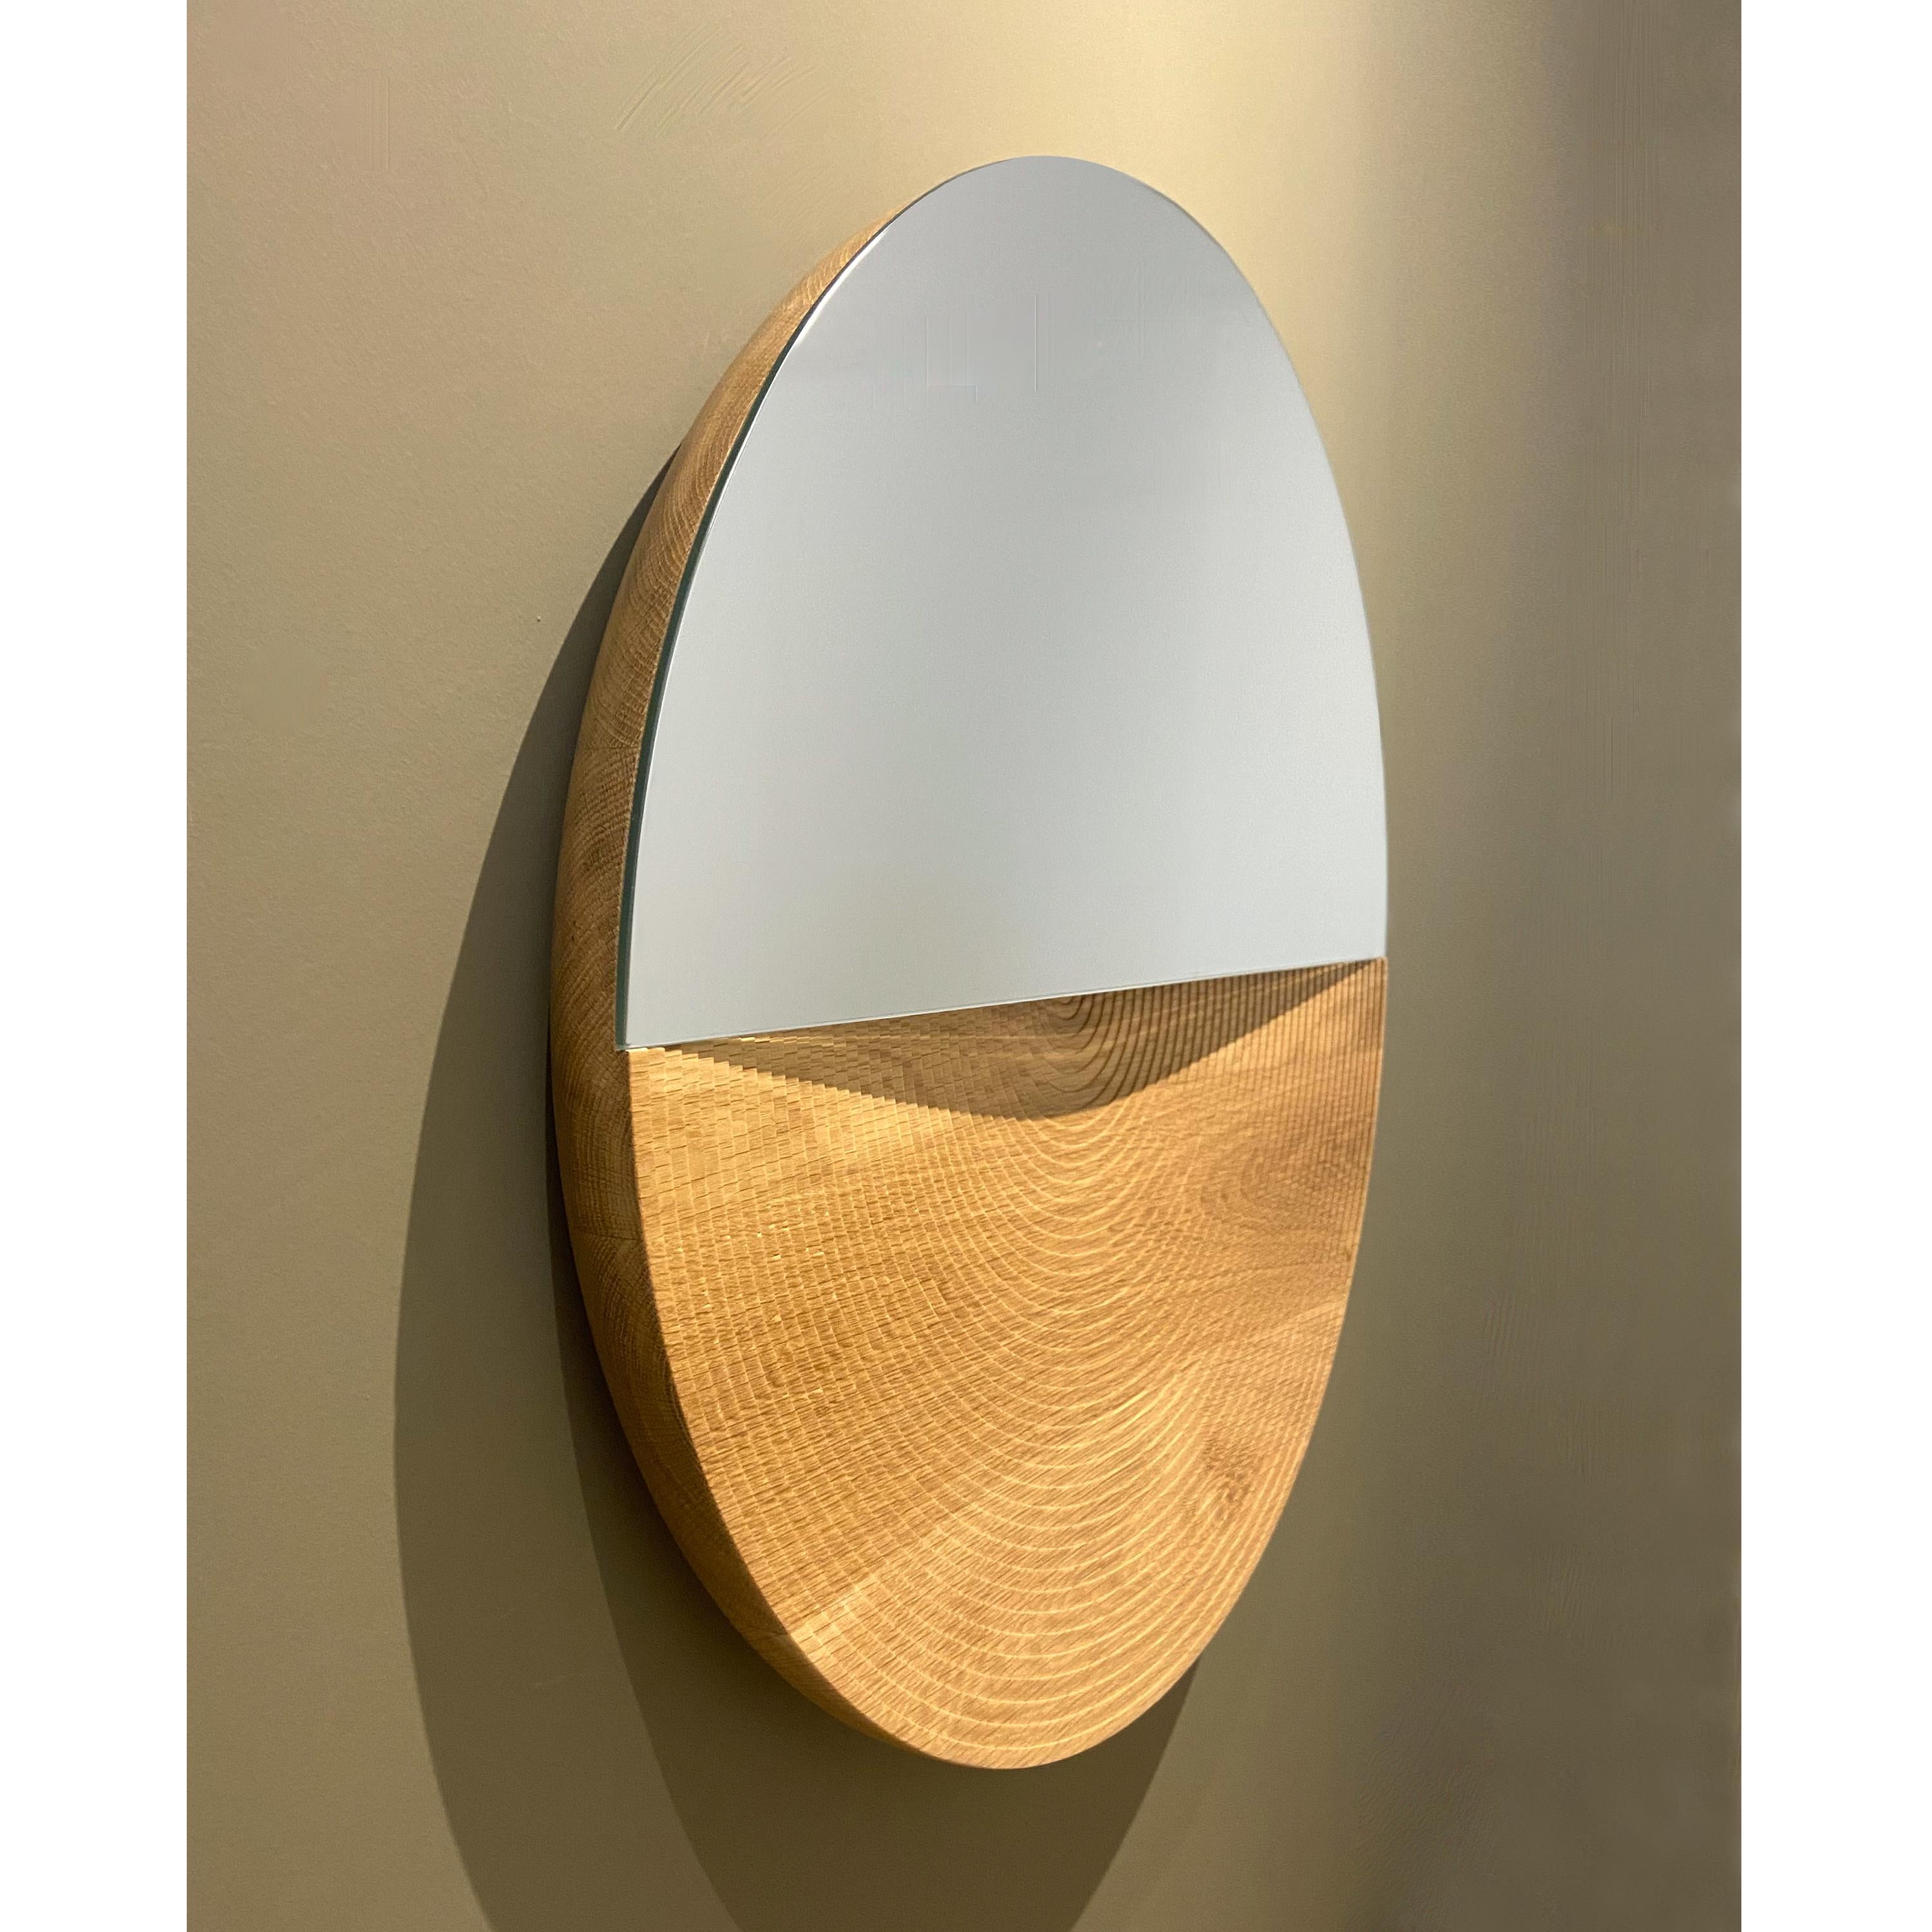 Turkish Arkhe Mirror in Oak, Modern Round Sculptural by Fulden Topaloglu For Sale